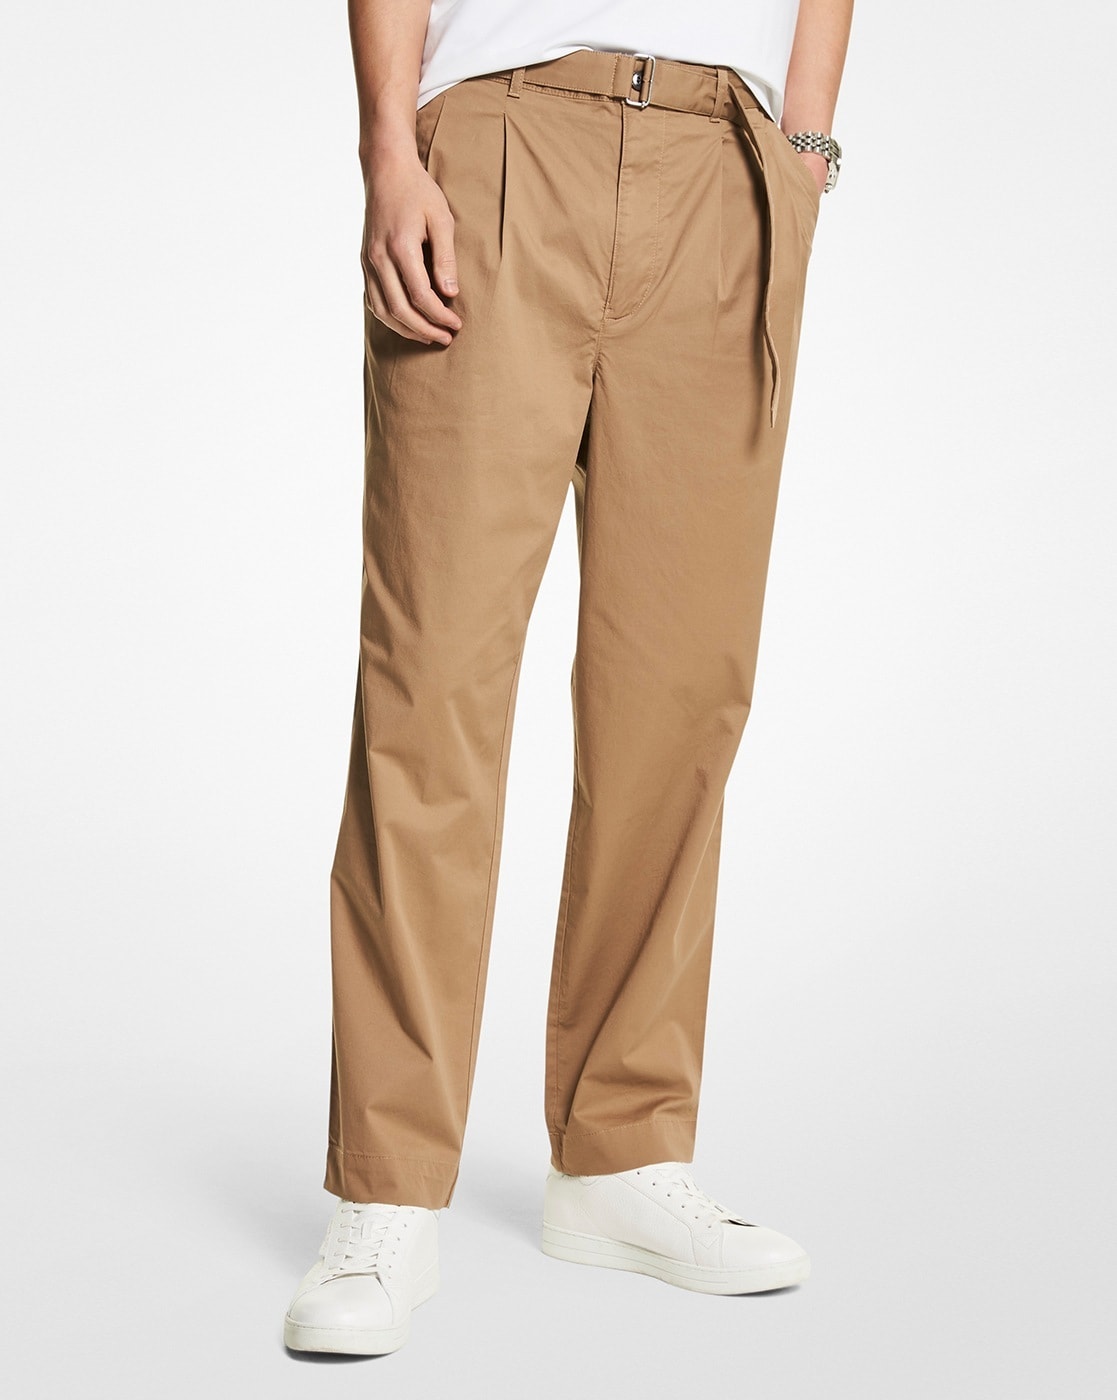 Buy Michael Kors Orange Slim Fit Pants Online  623507  The Collective